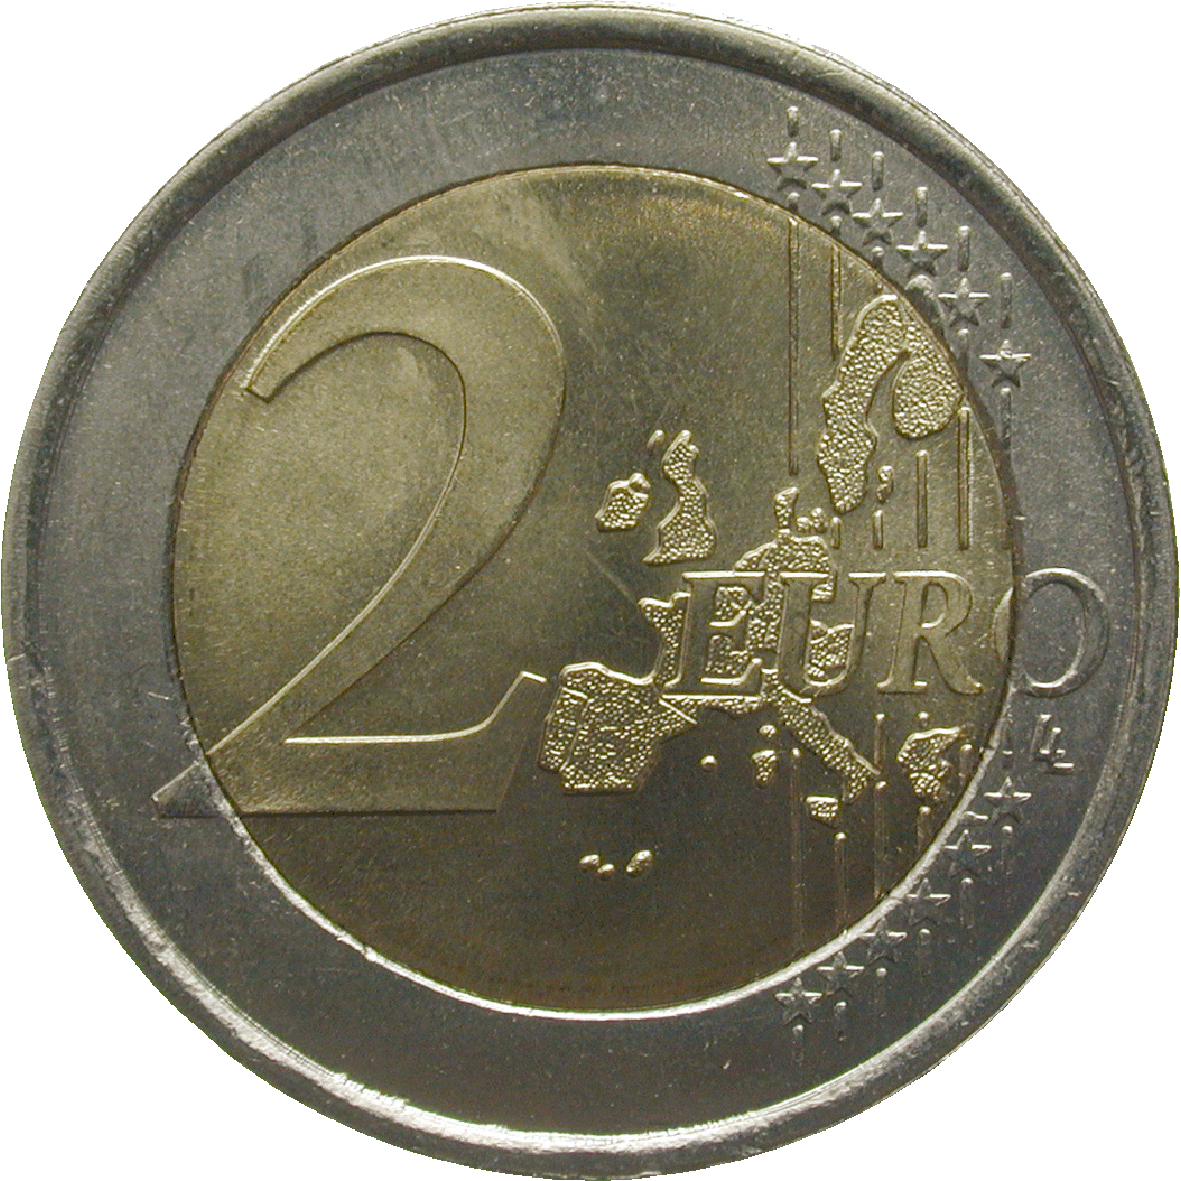 Republic of Portugal, 2 Euro 2002 (obverse)